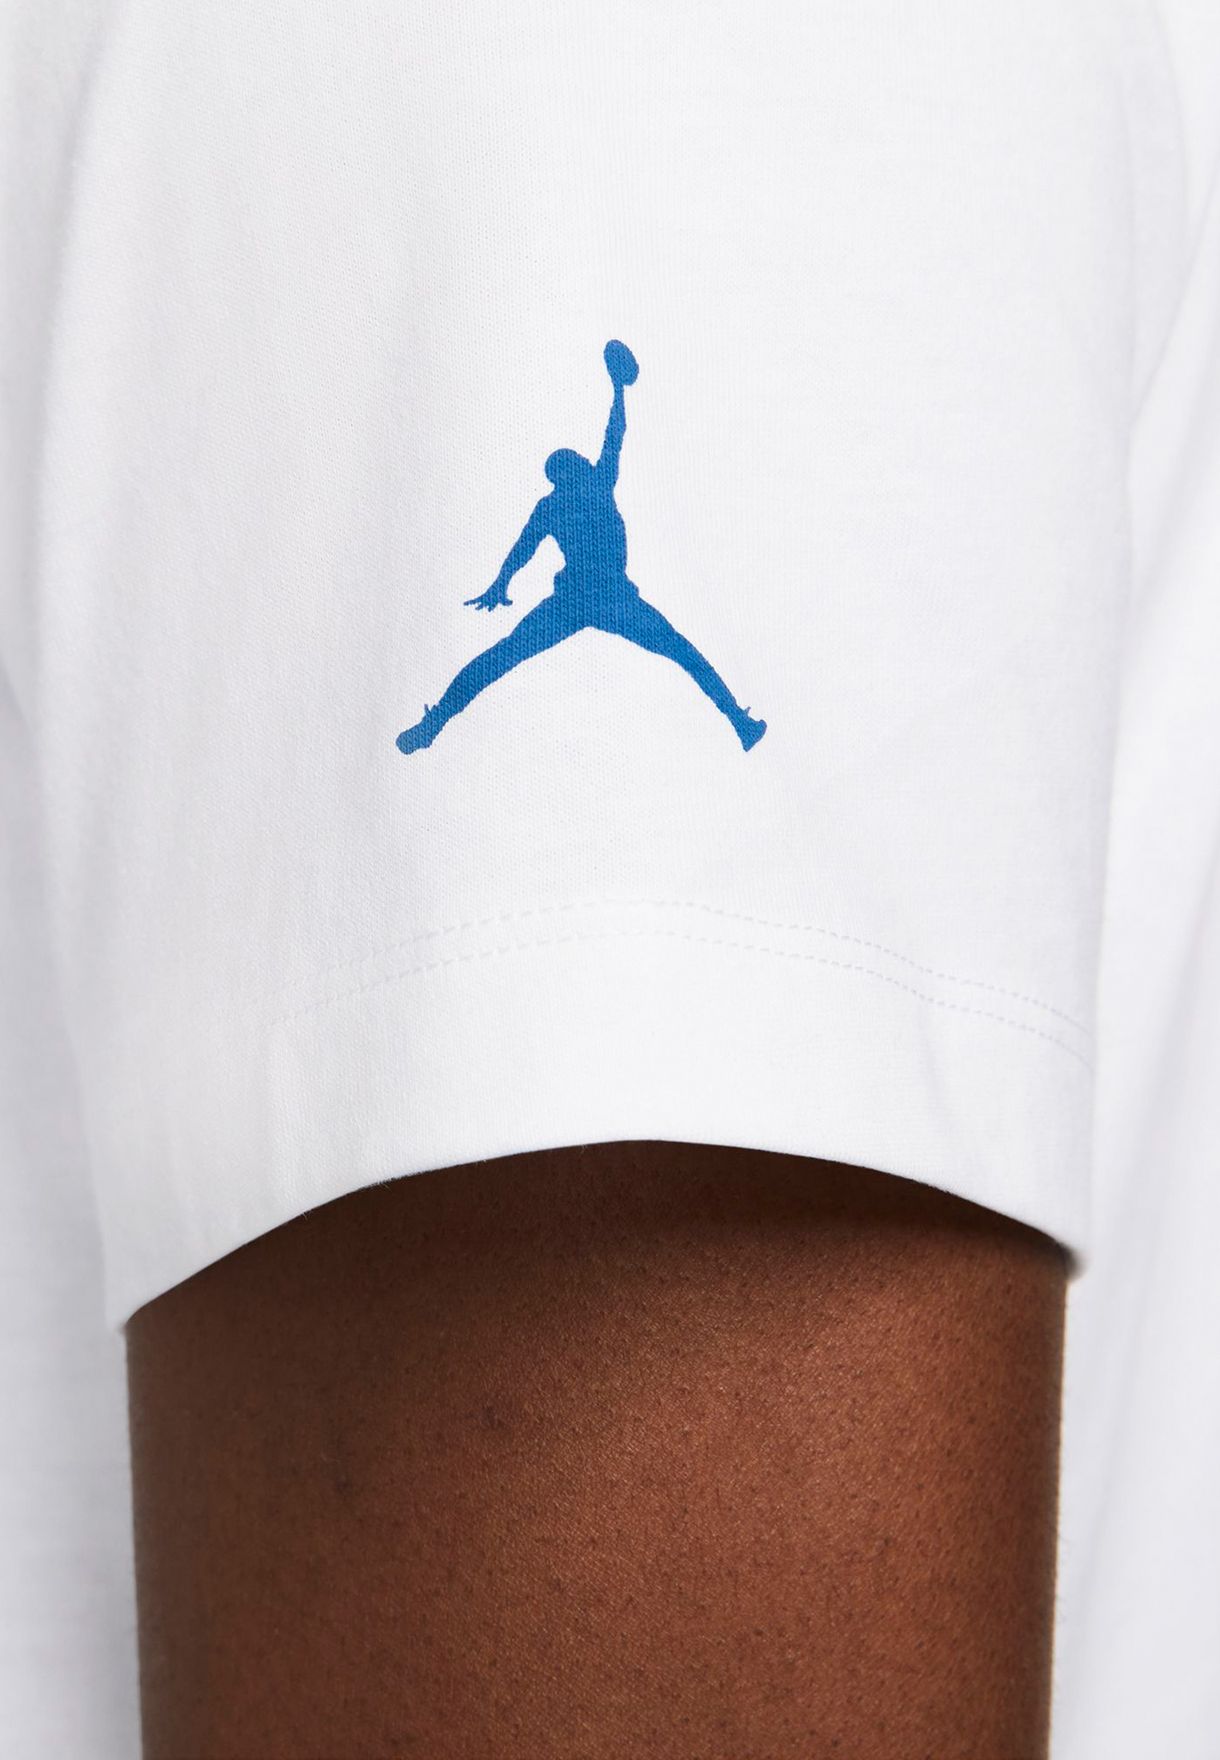 Jordan Flight Essential Air Graphic T-Shirt